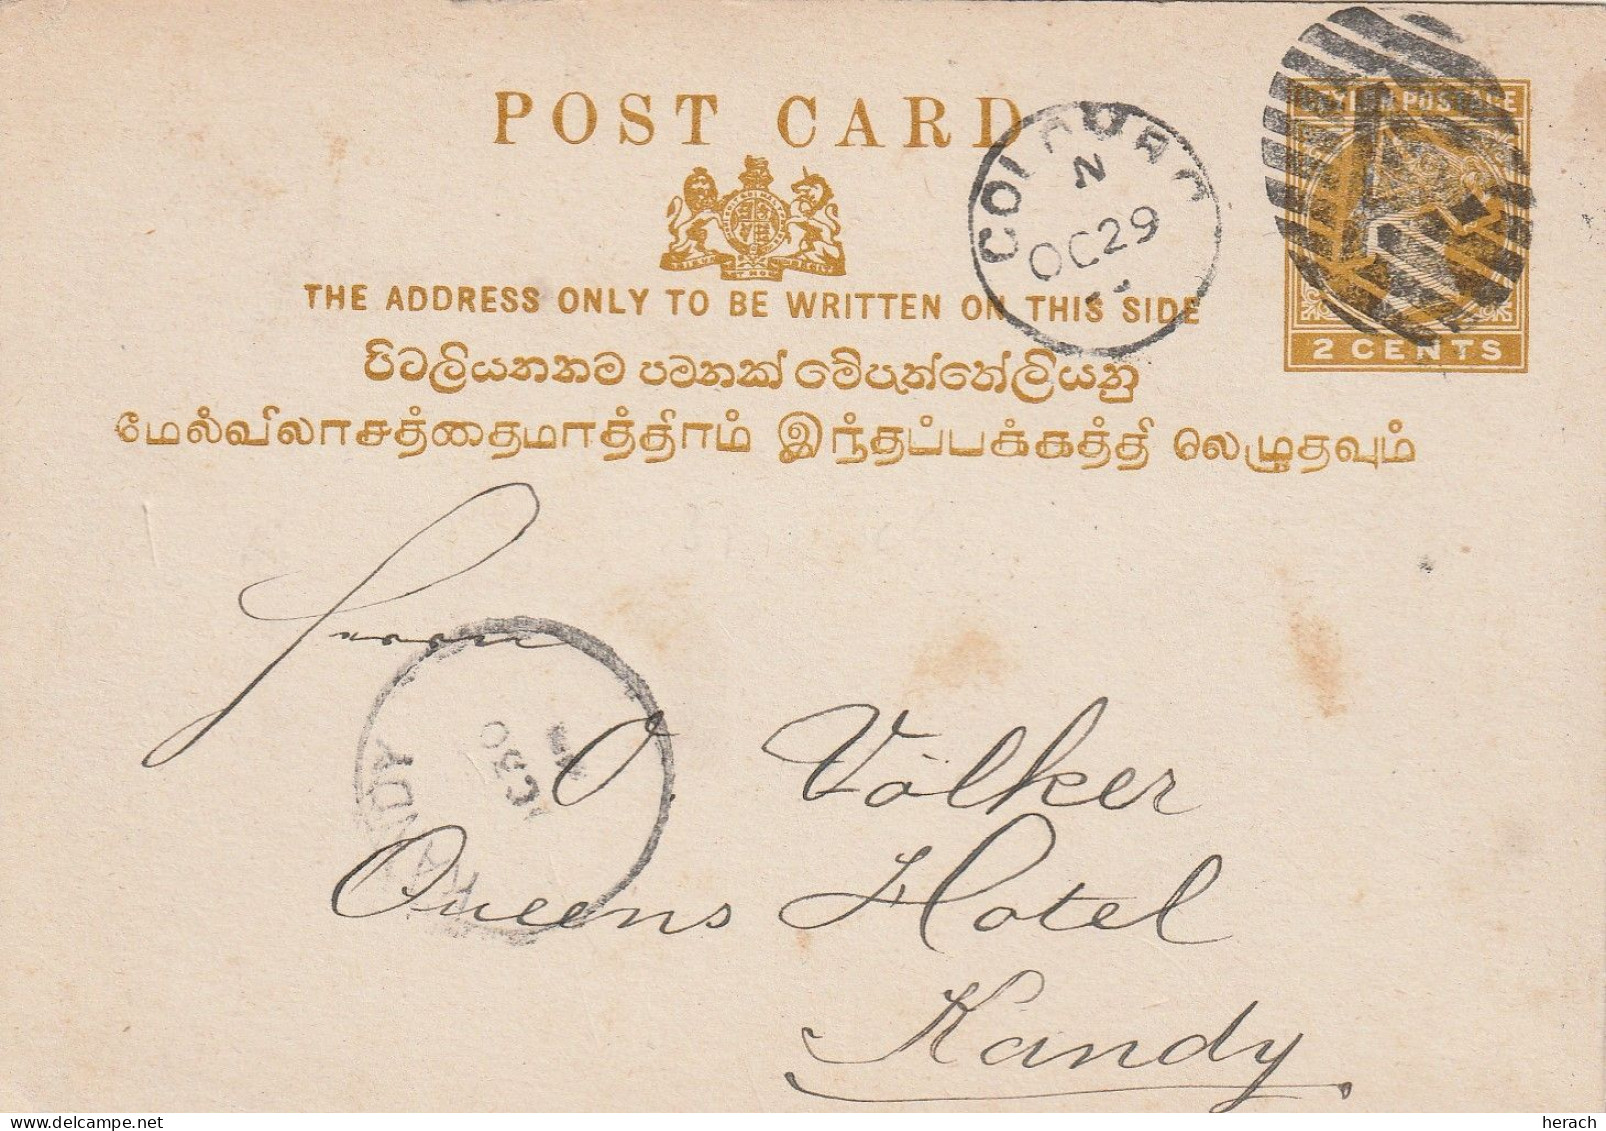 Ceylan Entier Postal 1898 - Ceylon (...-1947)